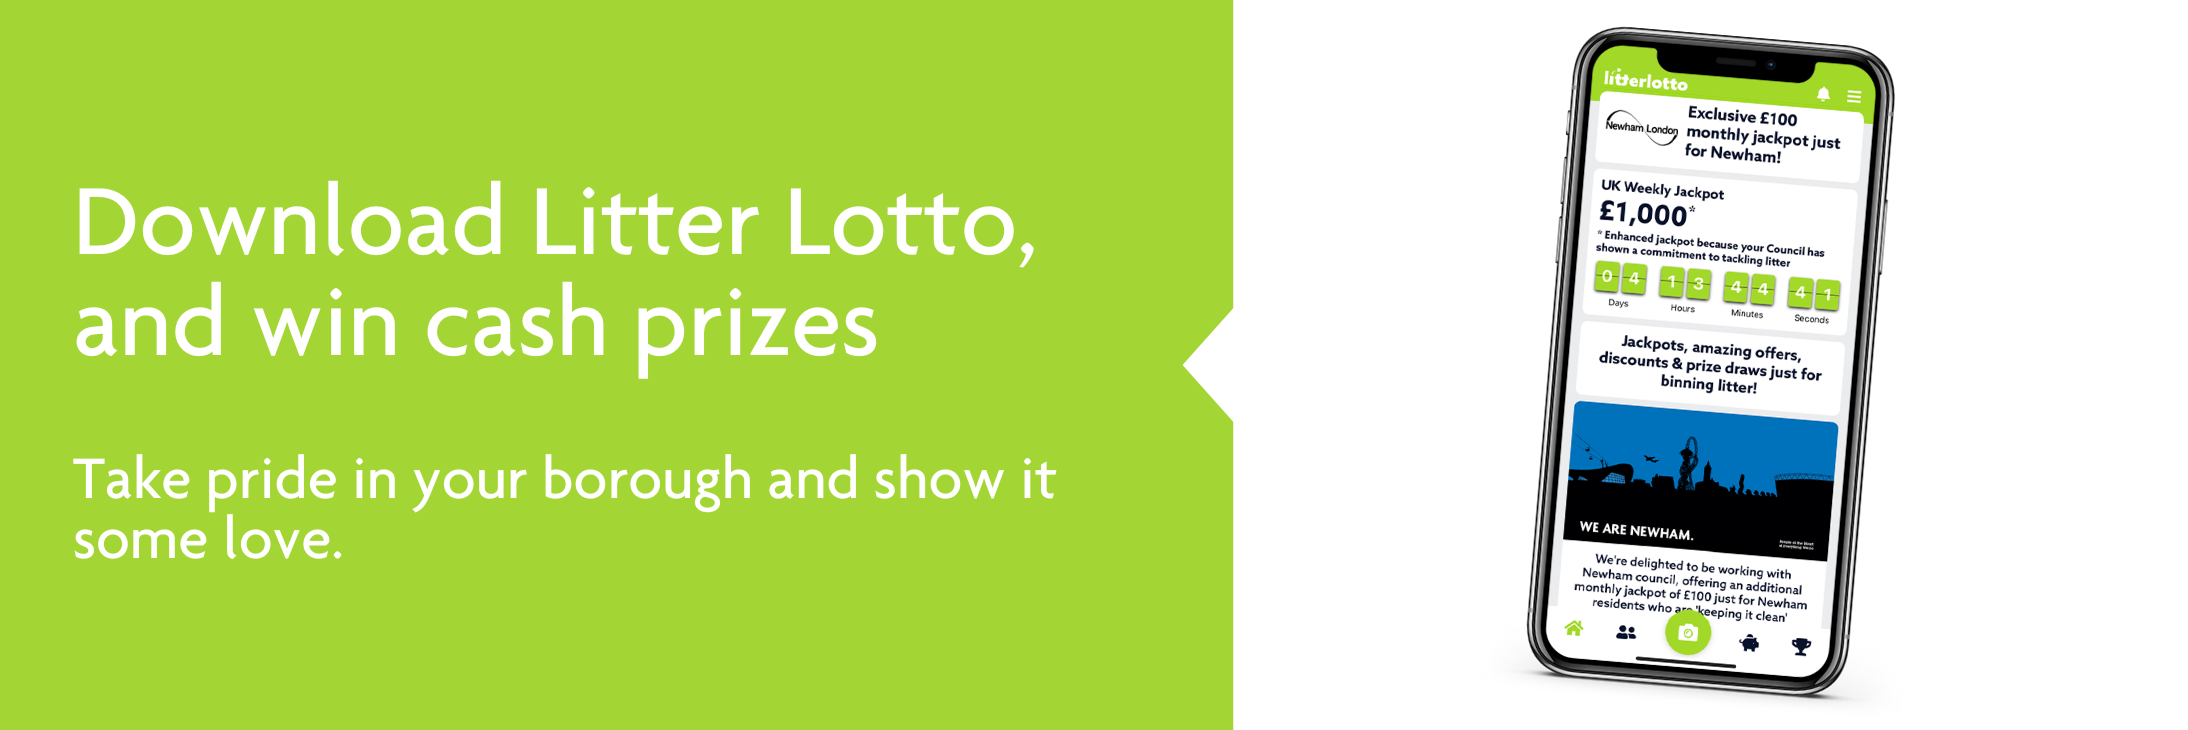 Download litter lotto header